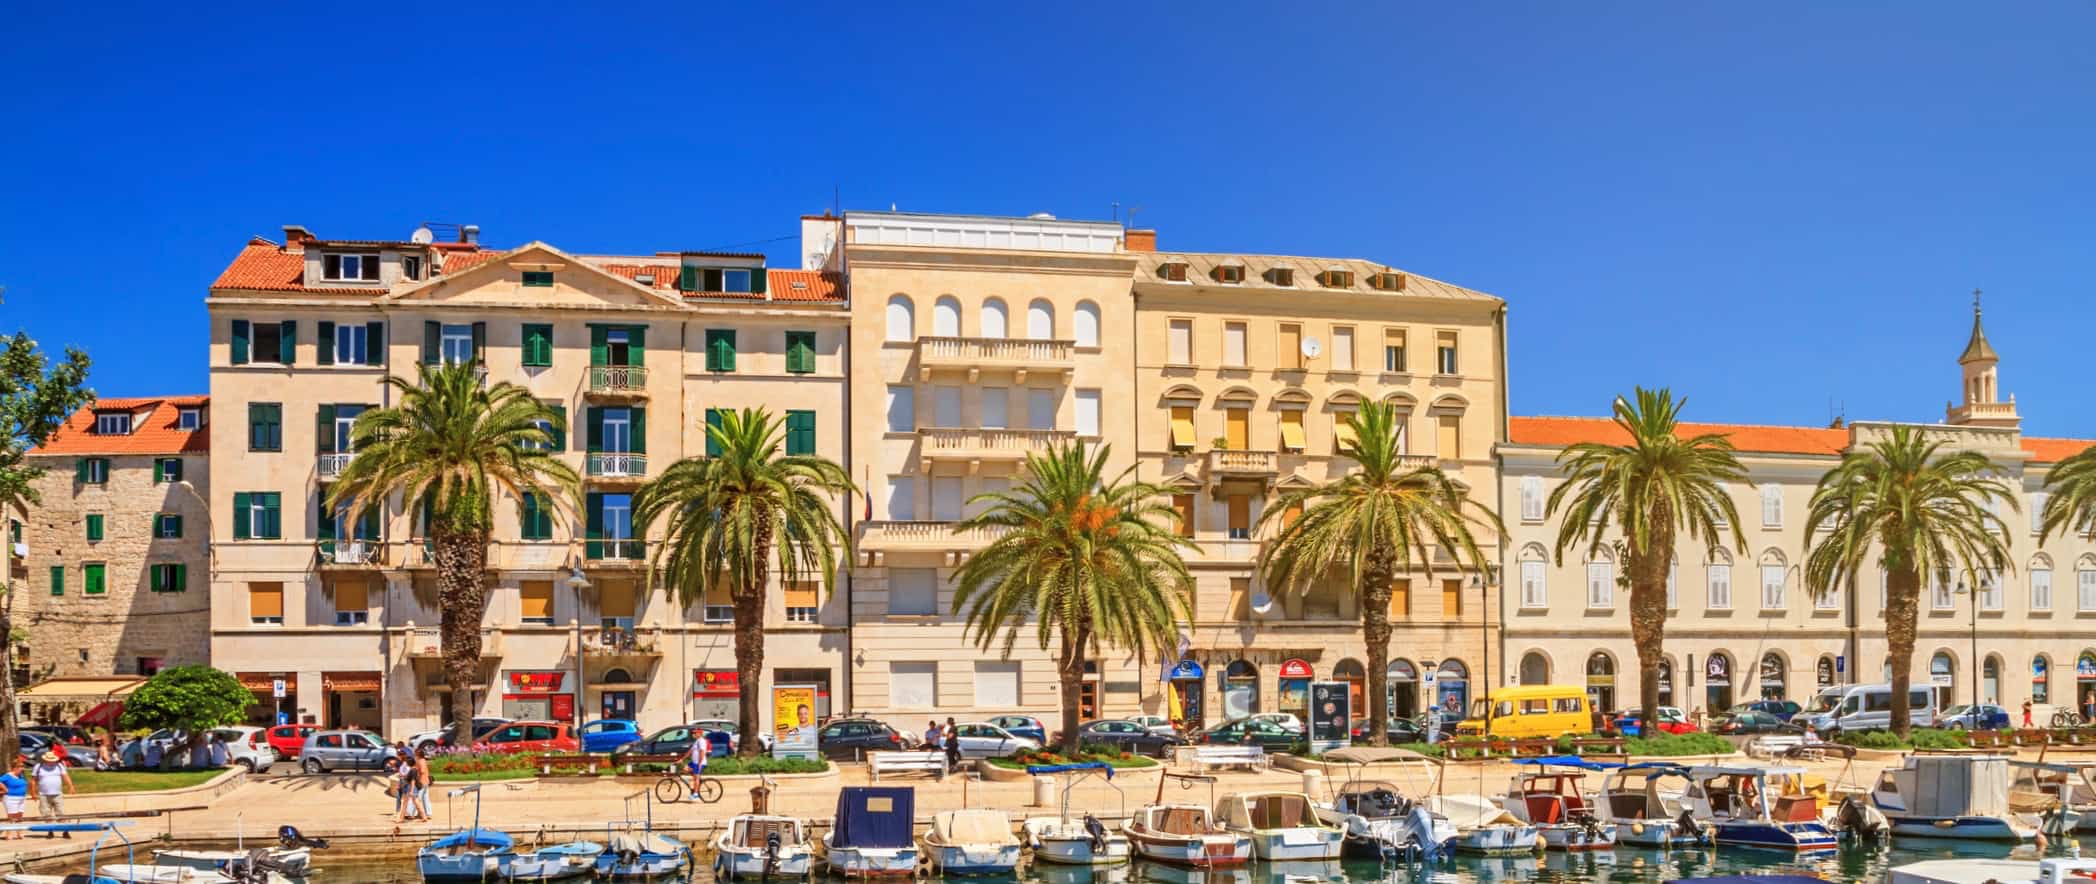 The charming coast of Split, Croatia and its historic seaside buildings